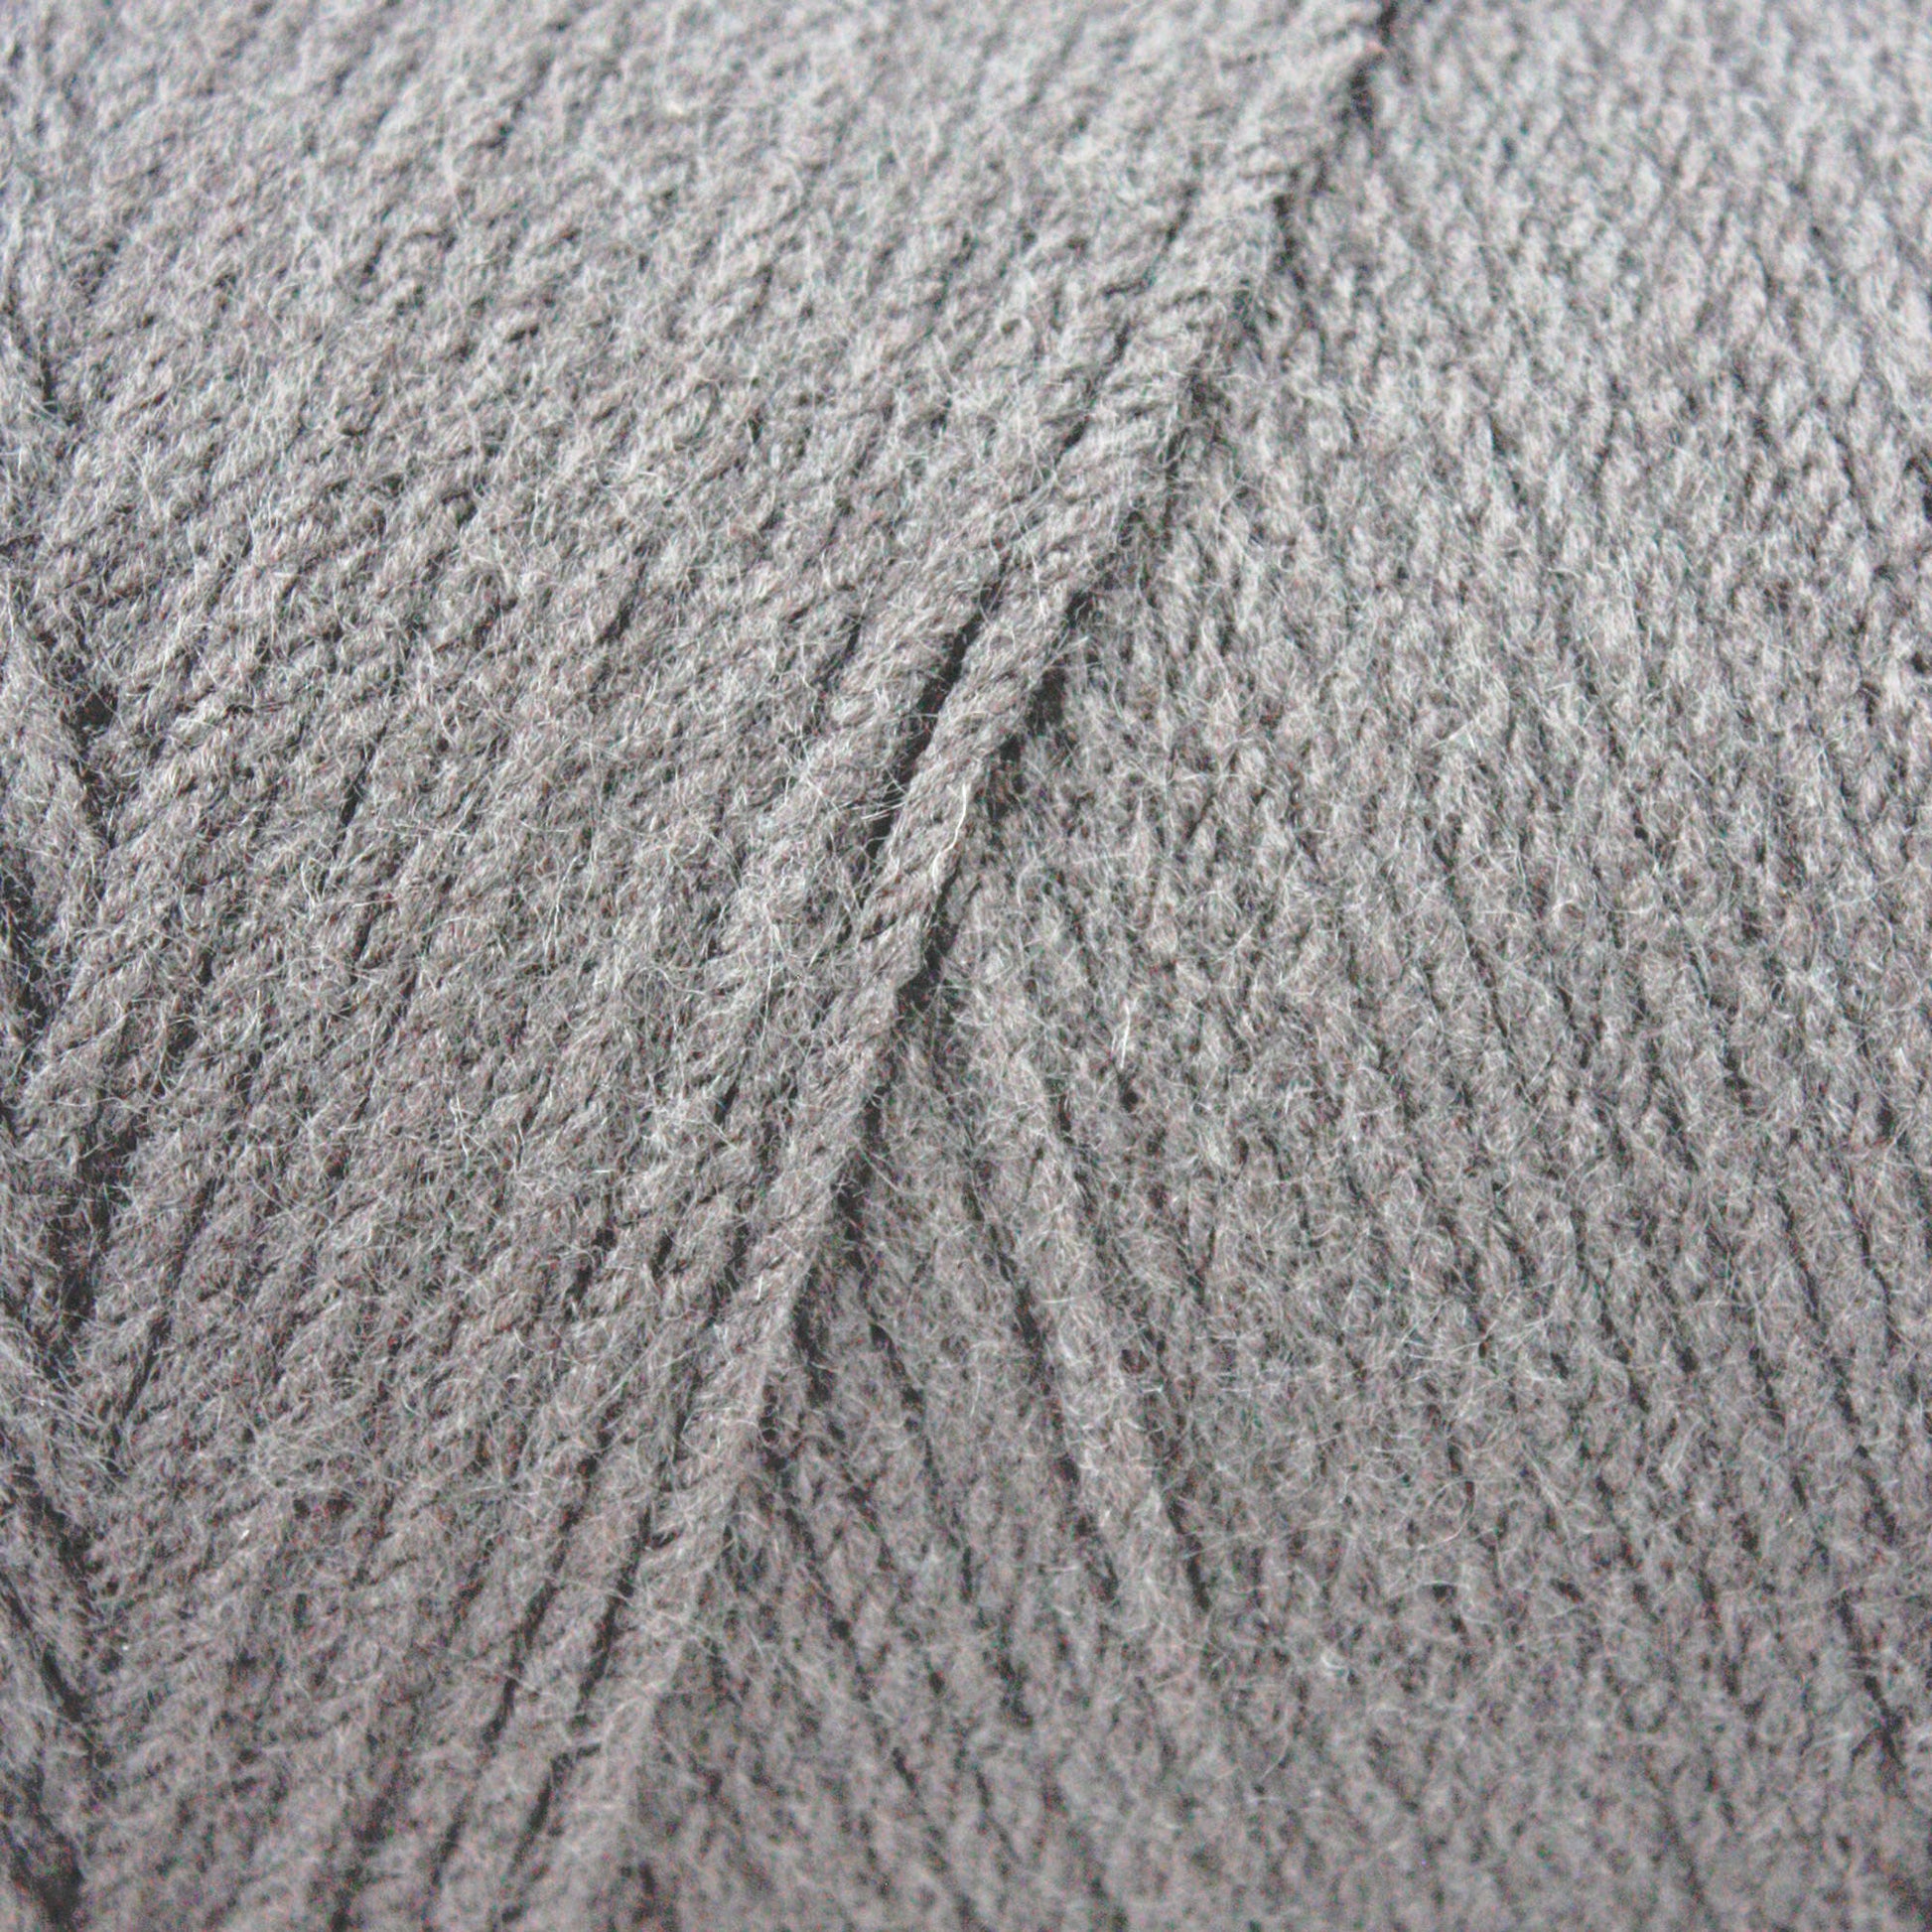 Caron One Pound #4 Medium Acrylic Yarn, Black 16oz/454g, 812 Yards (2 Pack)